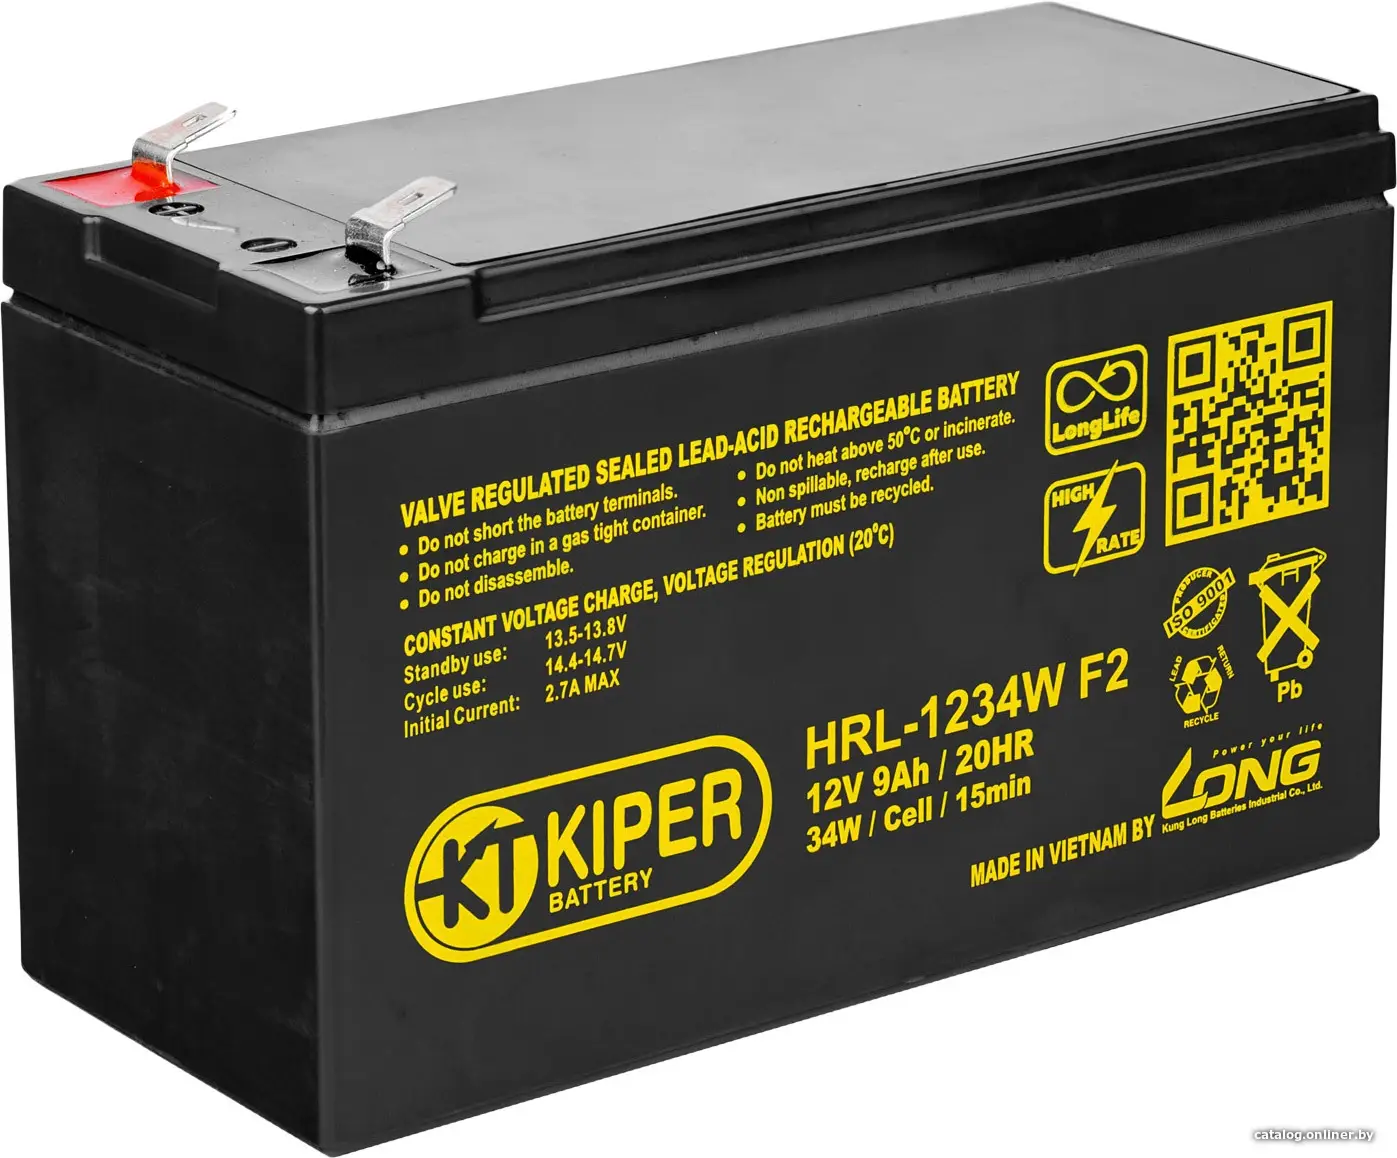 Купить Аккумуляторная батарея Kiper HRL-1234W F2 12V/9Ah, цена, опт и розница